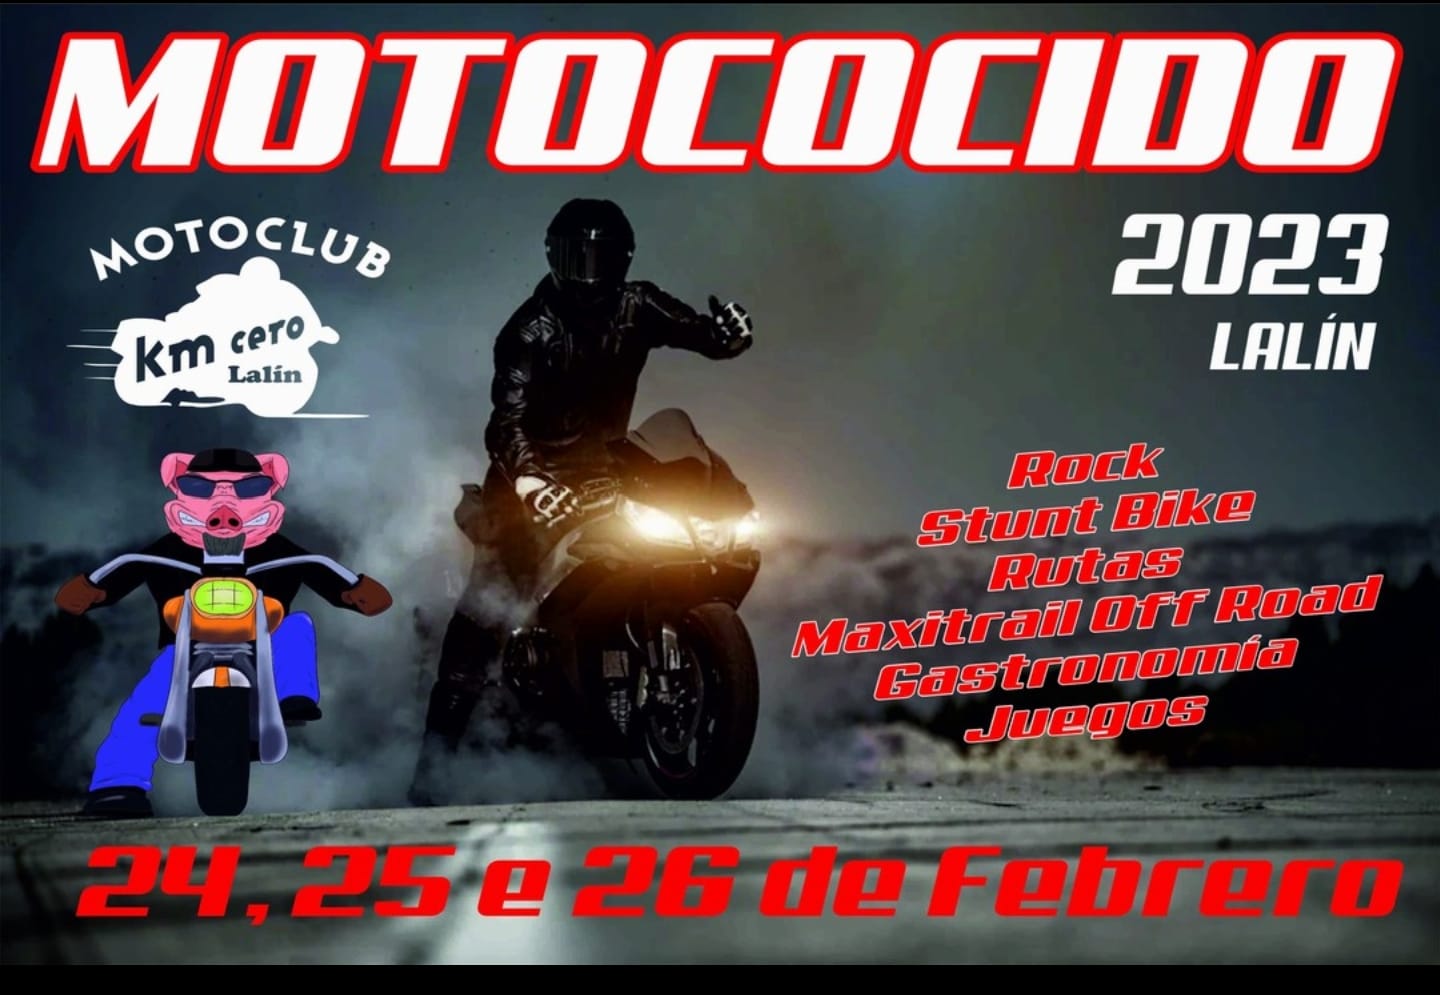 MOTOCOCIDO LALIN 2023. Organiza Motoclub KM0, Lalín (PO)